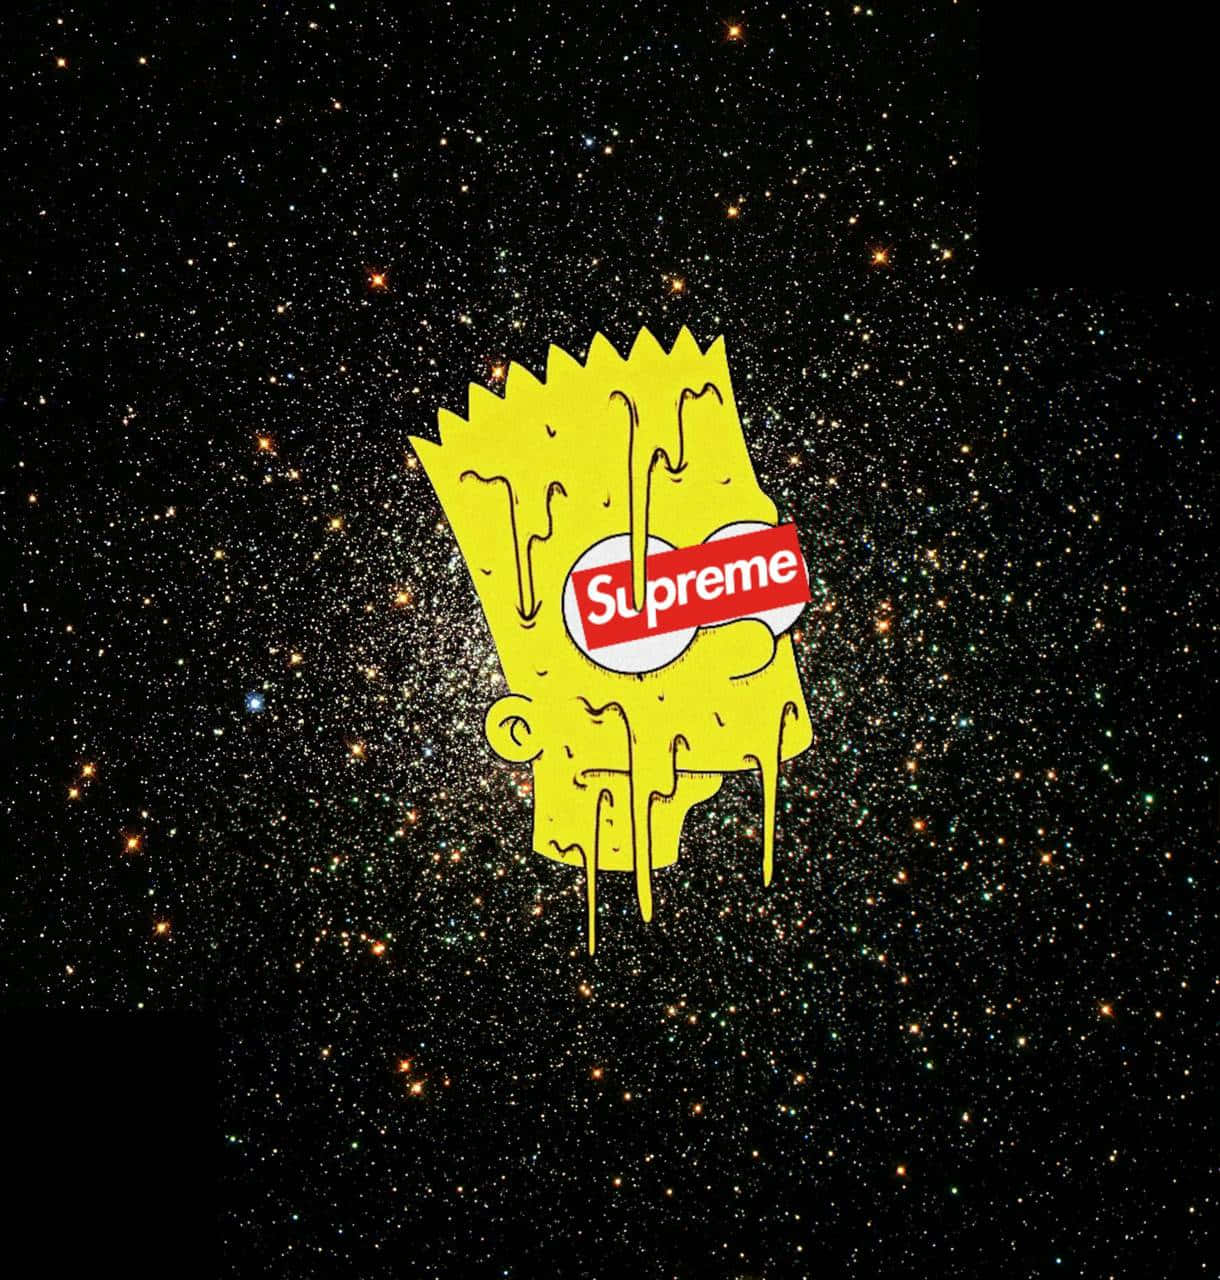 "Starring Supreme Simpson, No Ordinary Skater" Wallpaper